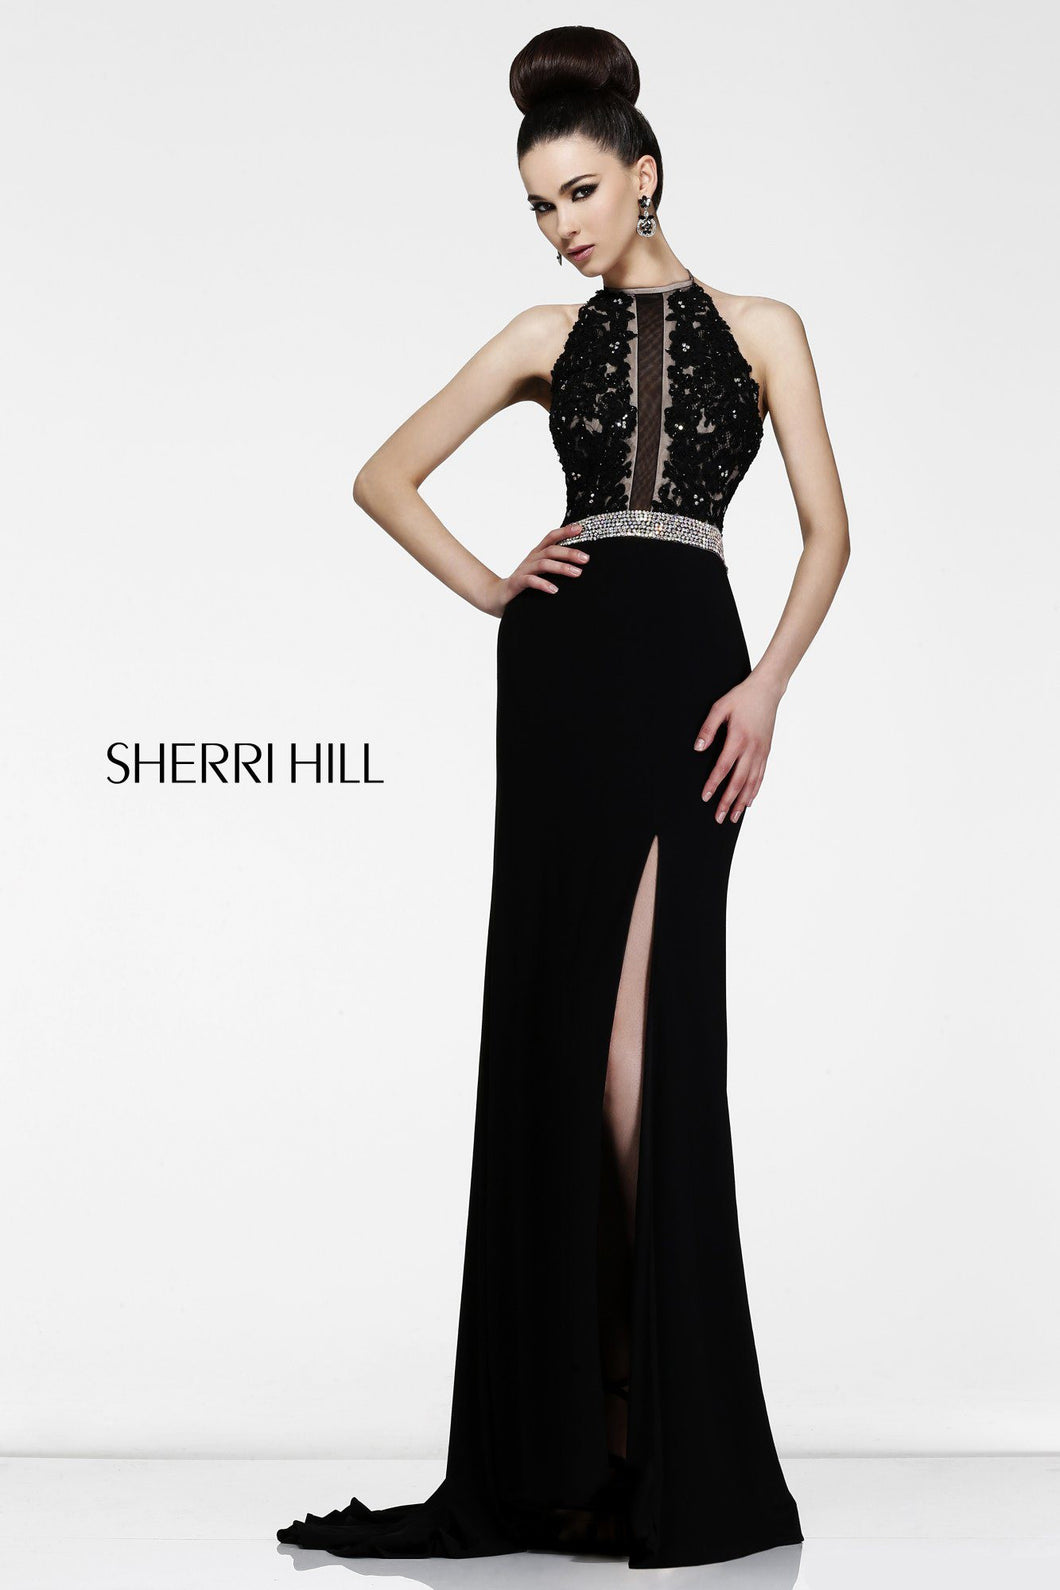 Sherri Hill Evening Prom Dress 21210, Black size 8, Halter Neckline, stretch jersey